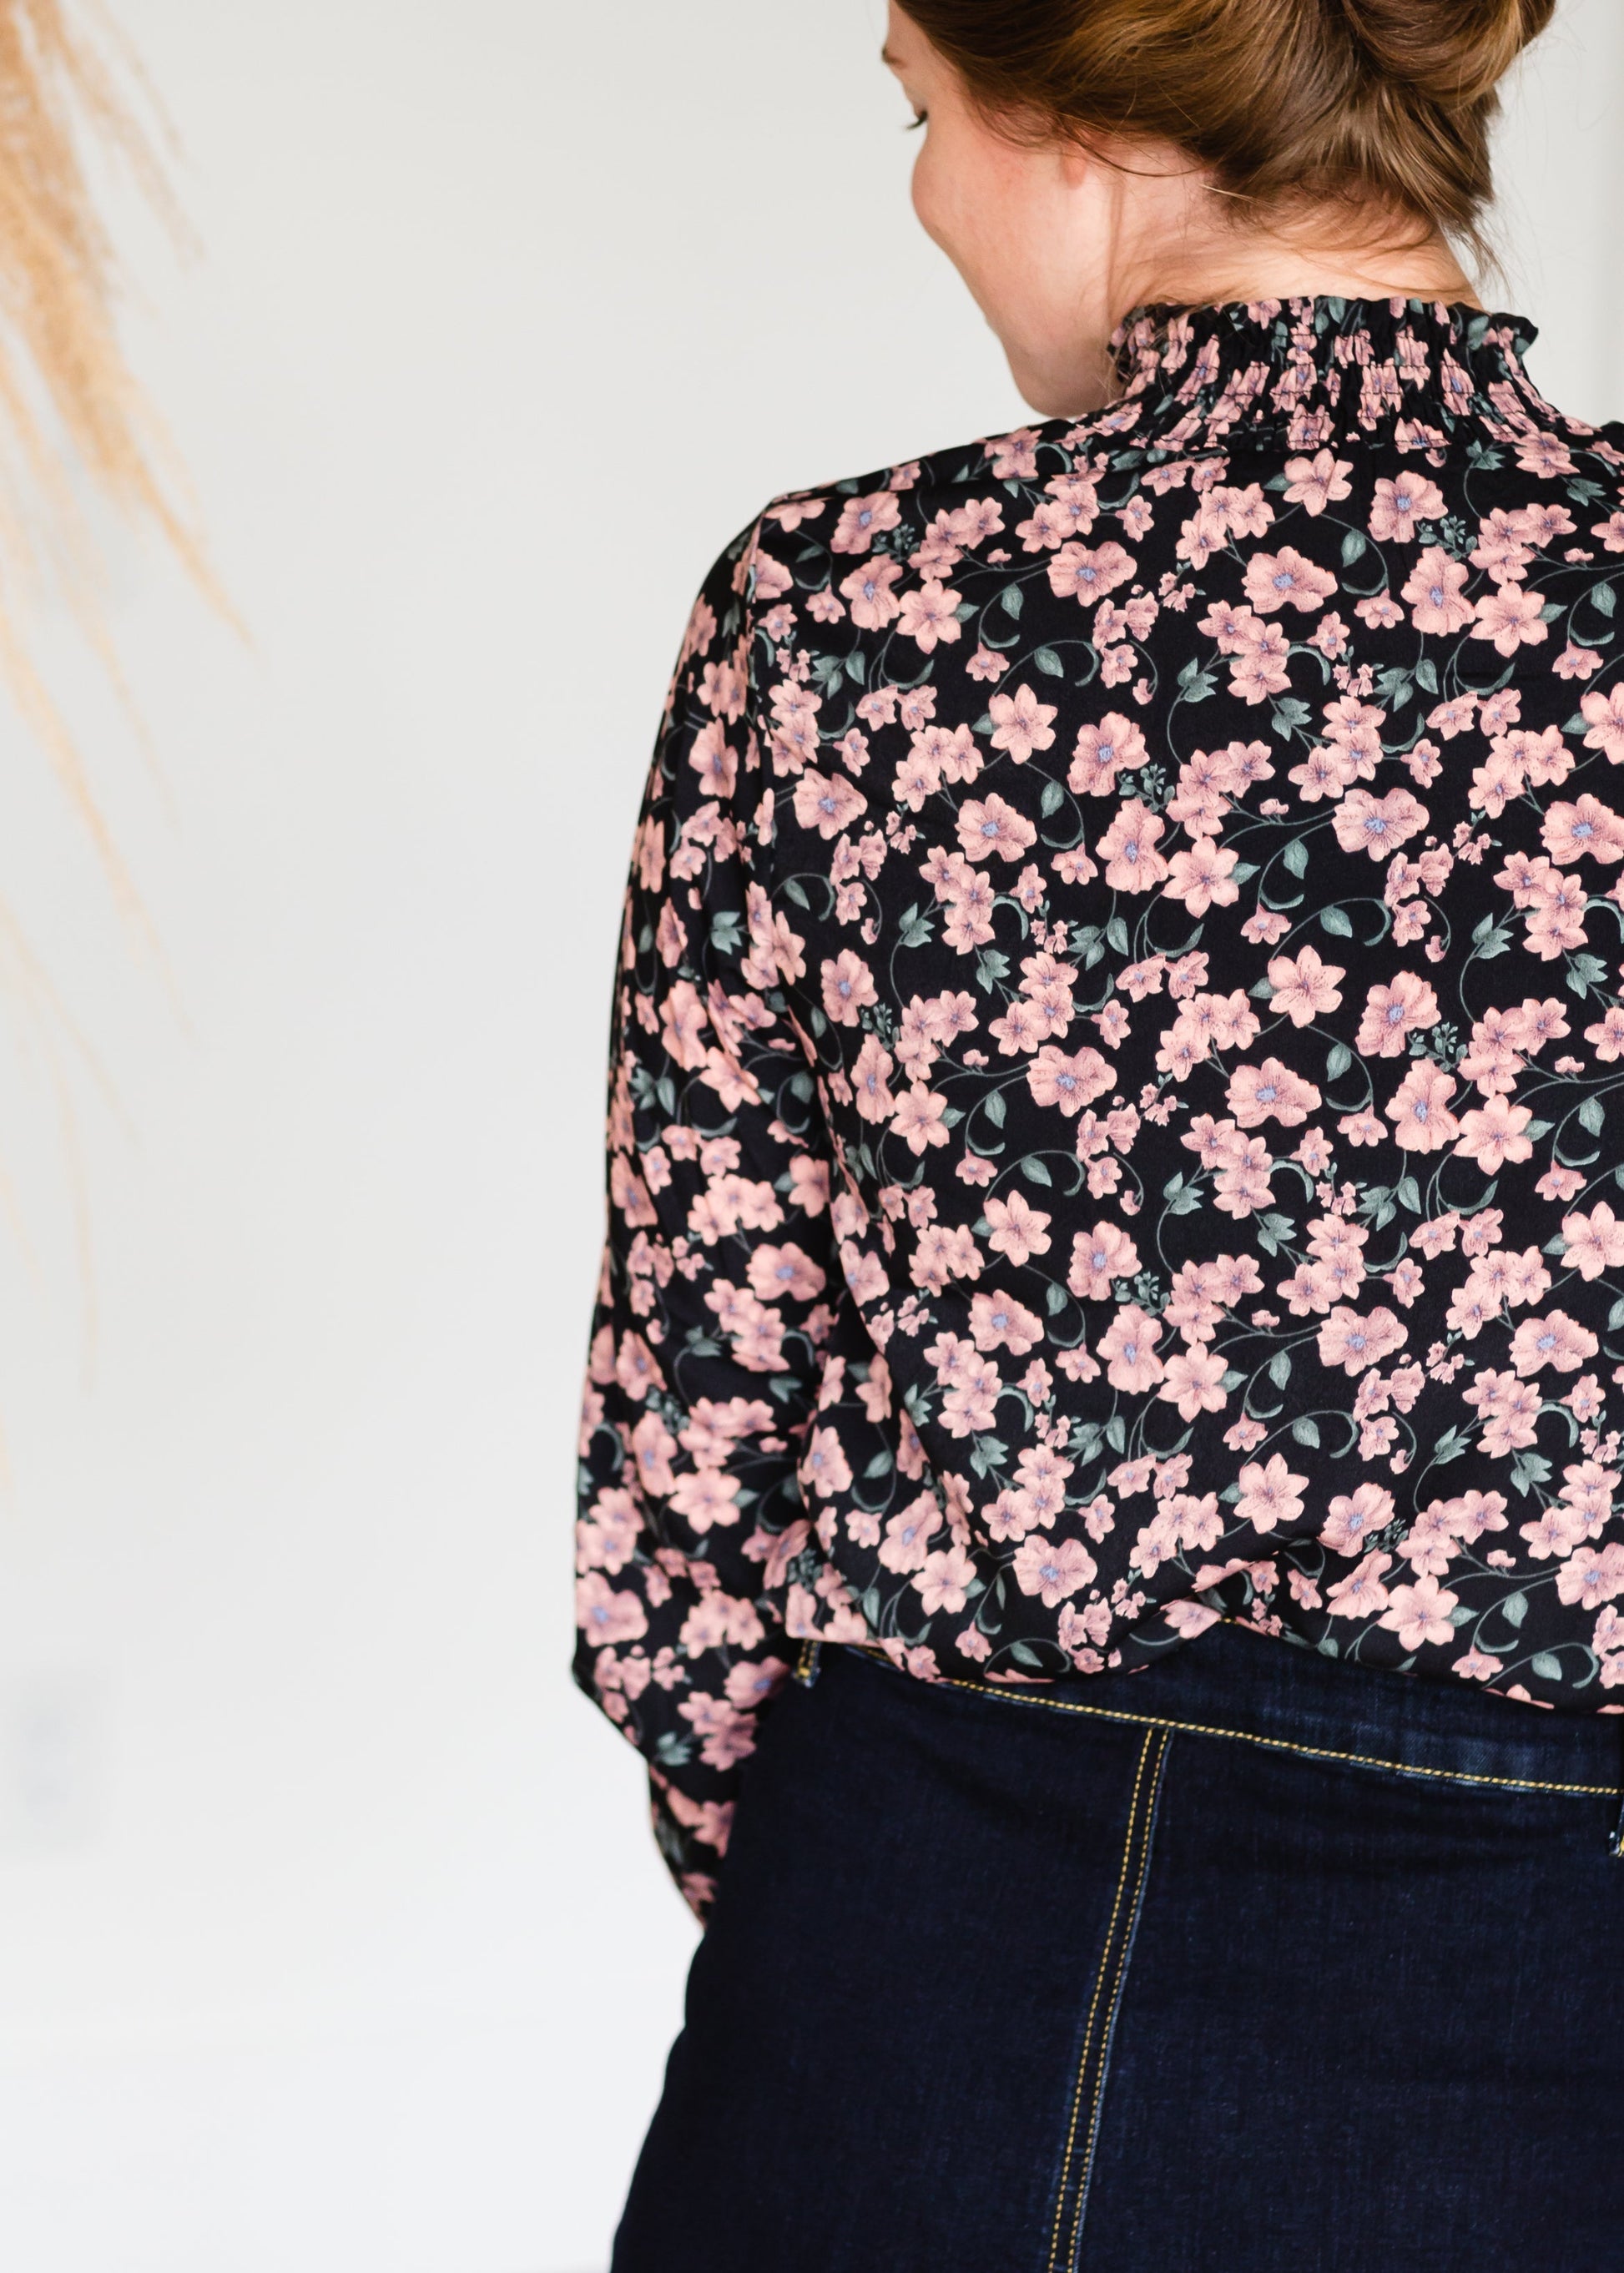 Black Long Sleeve Blush Floral Top - FINAL SALE Shirt